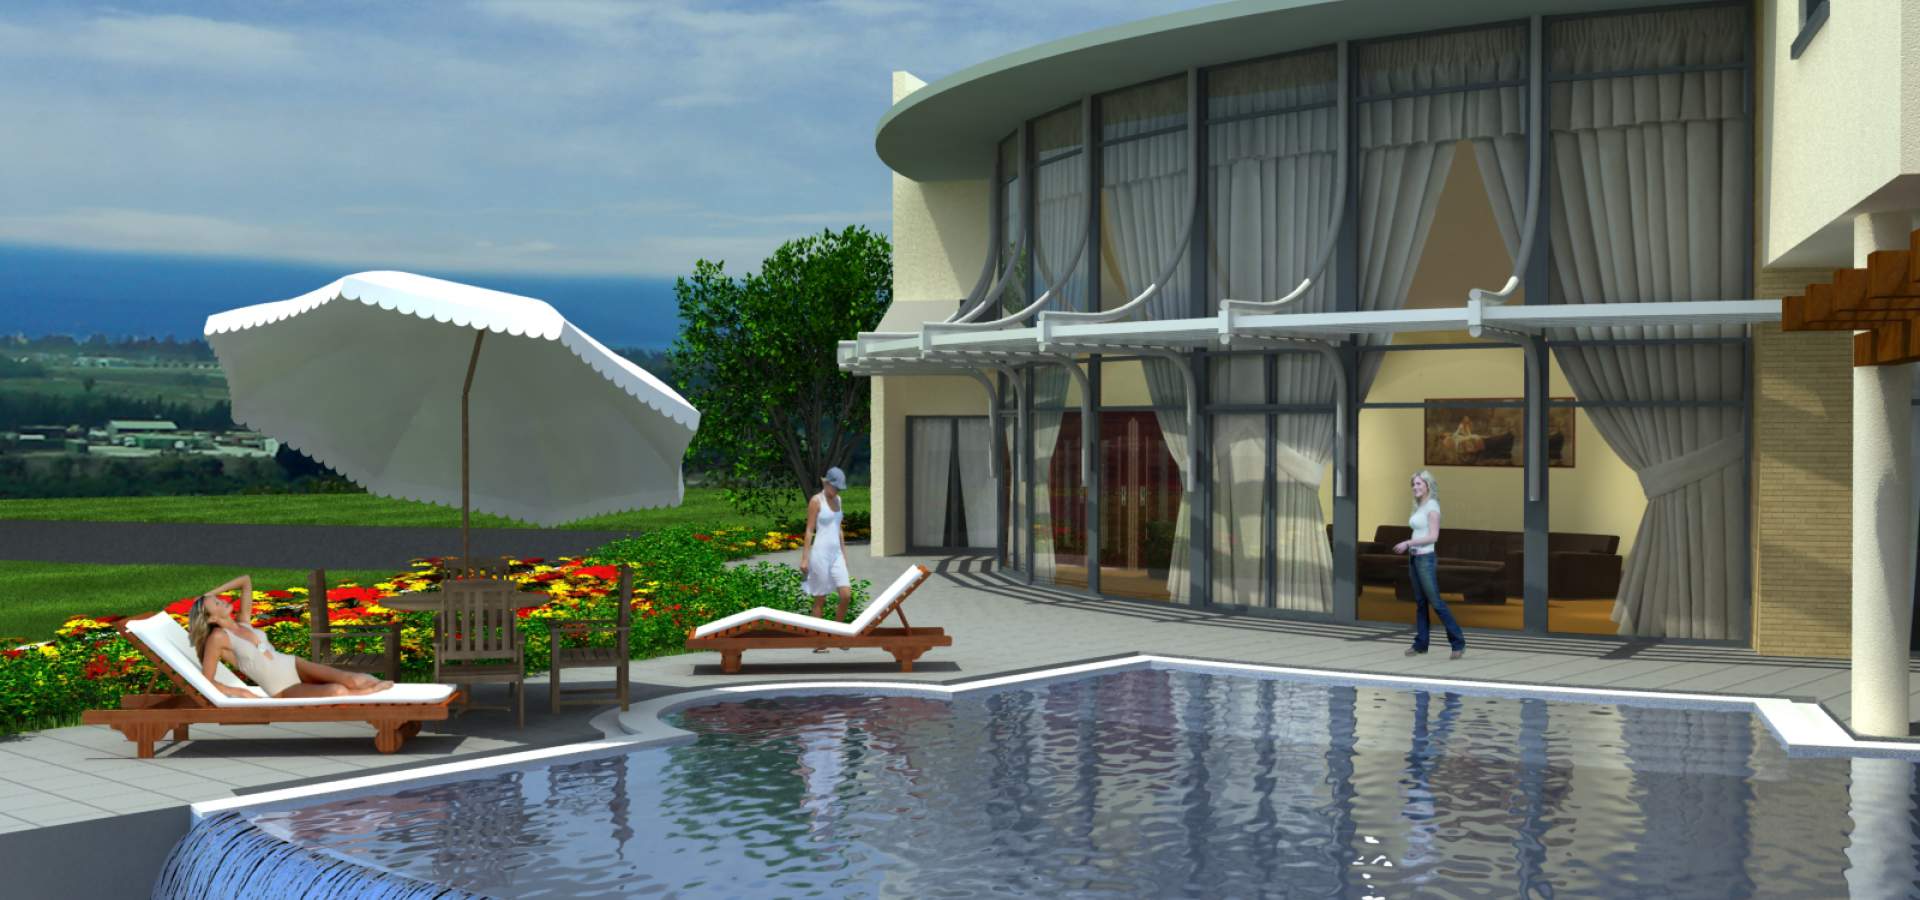 Konia Luxury Houses Exterior Design